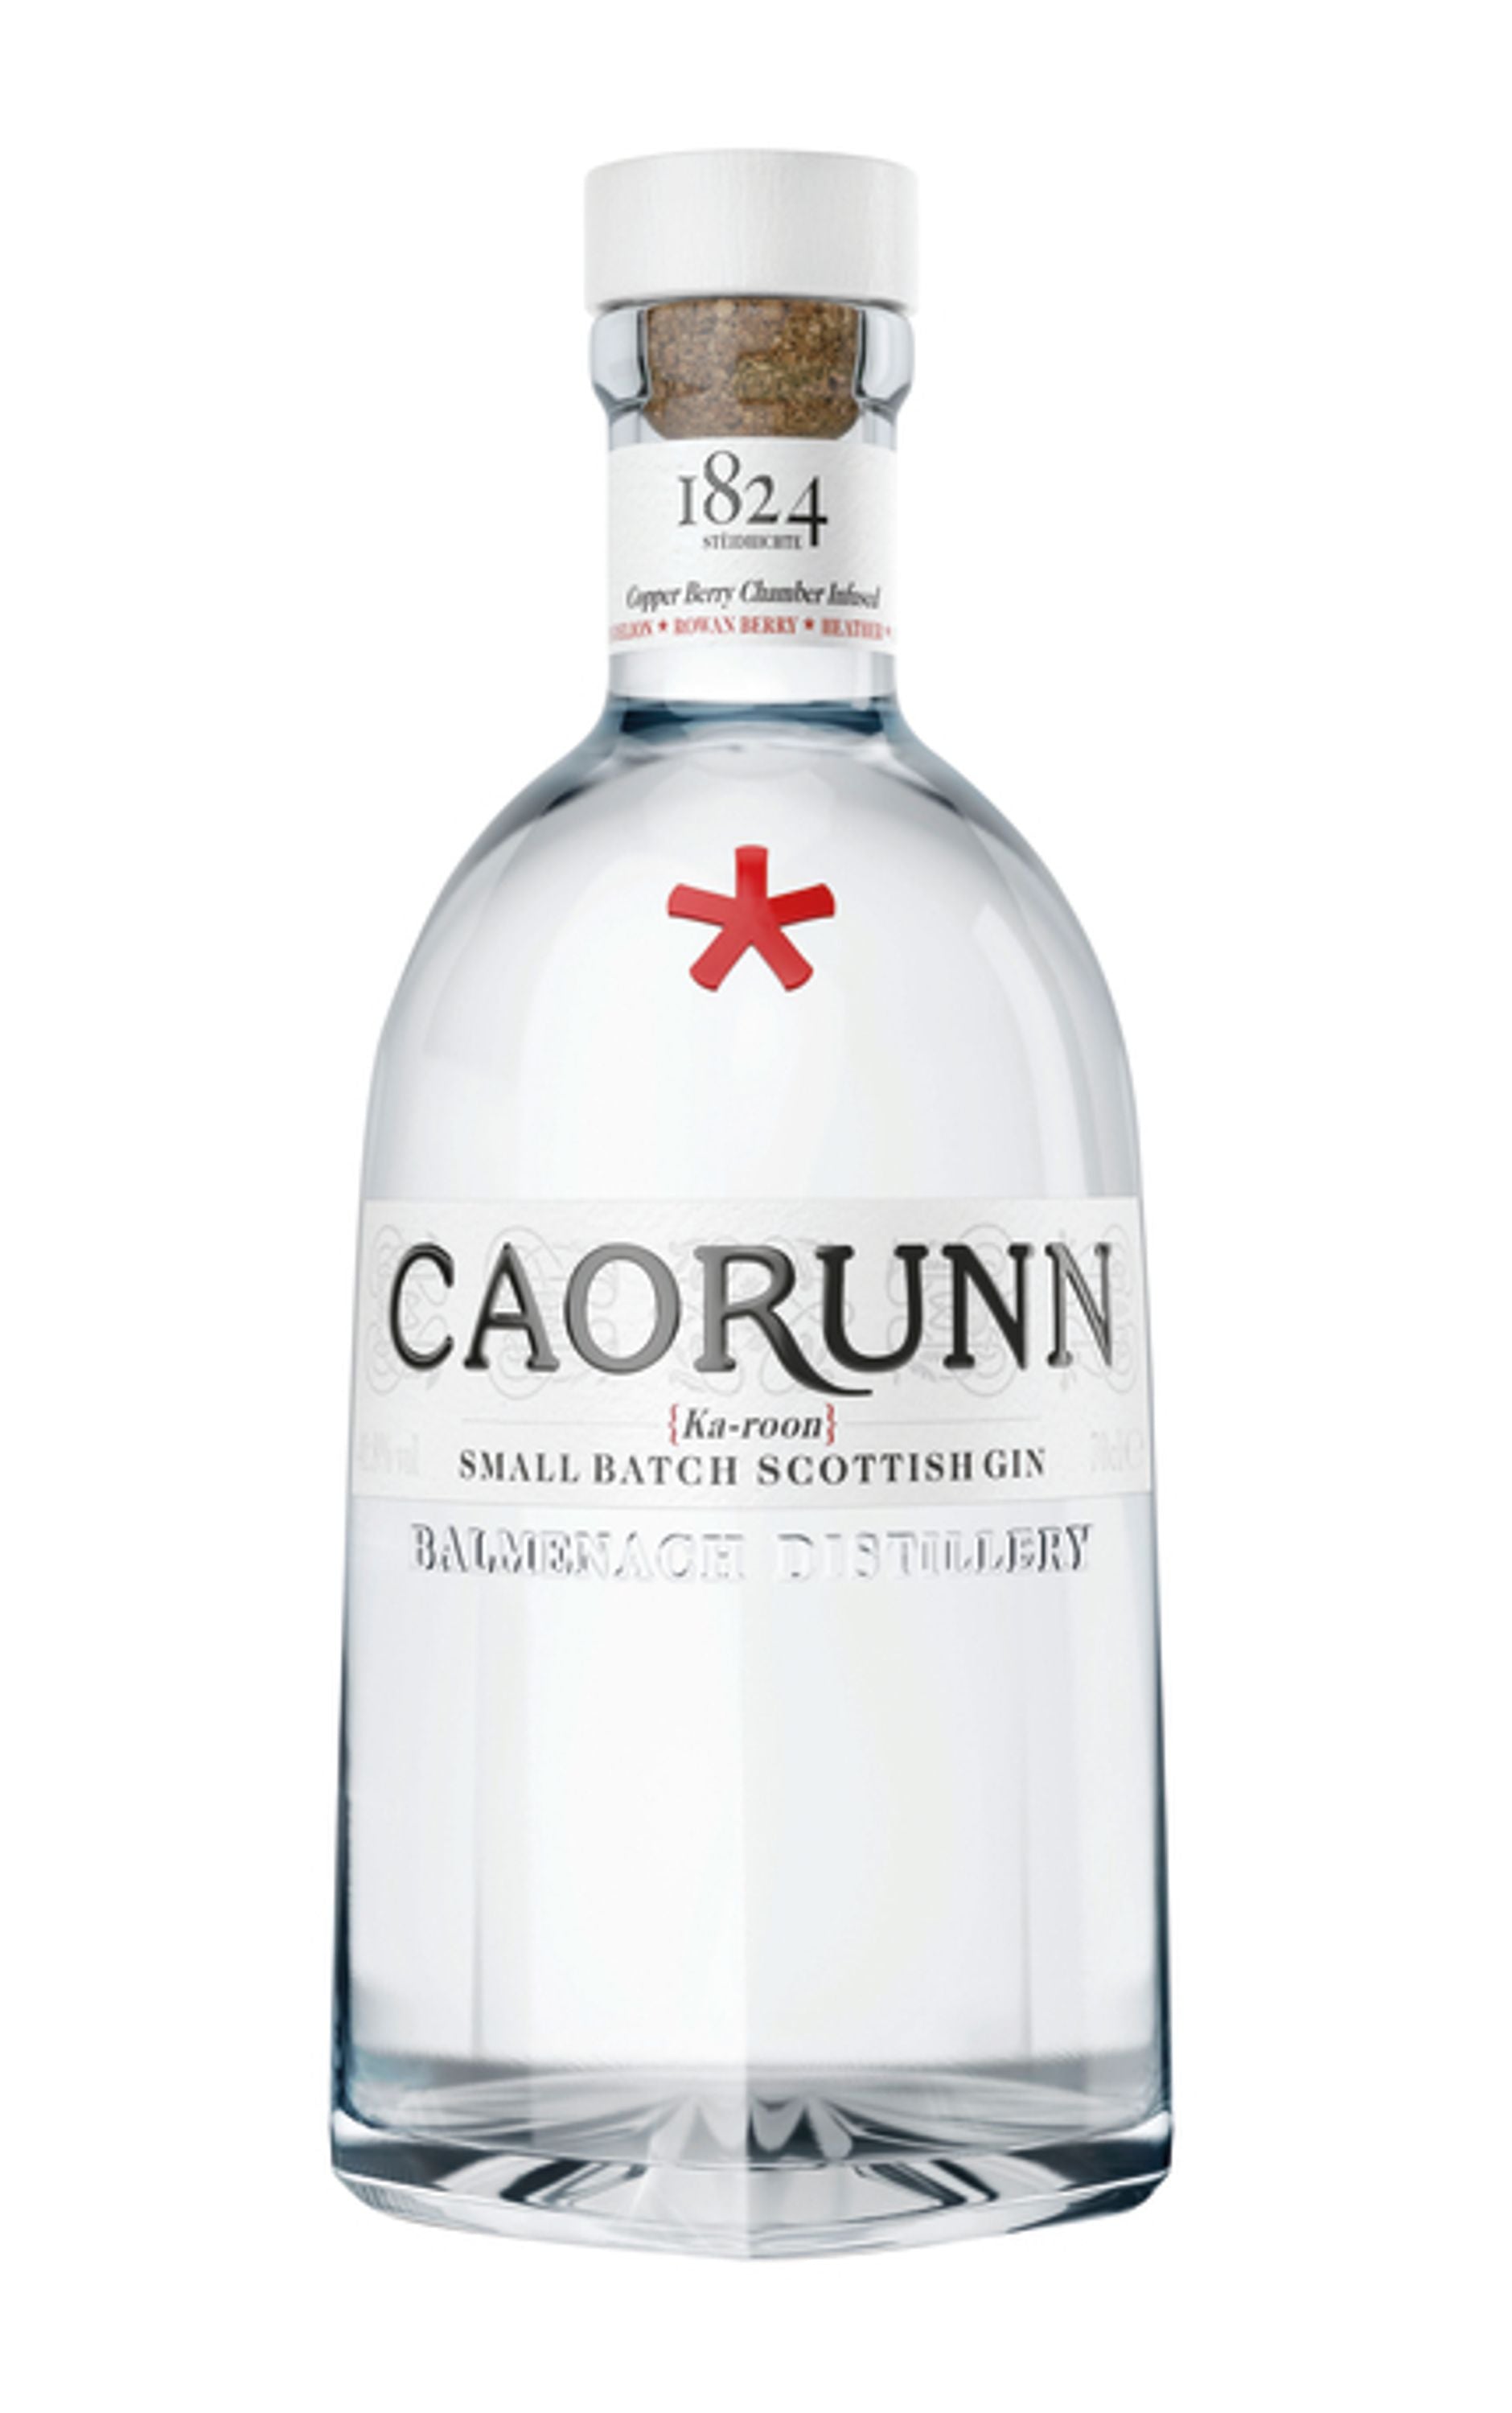 Caorunn Small Batch Scottish Dry Gin 0.7l, alc. 41.8% by volume